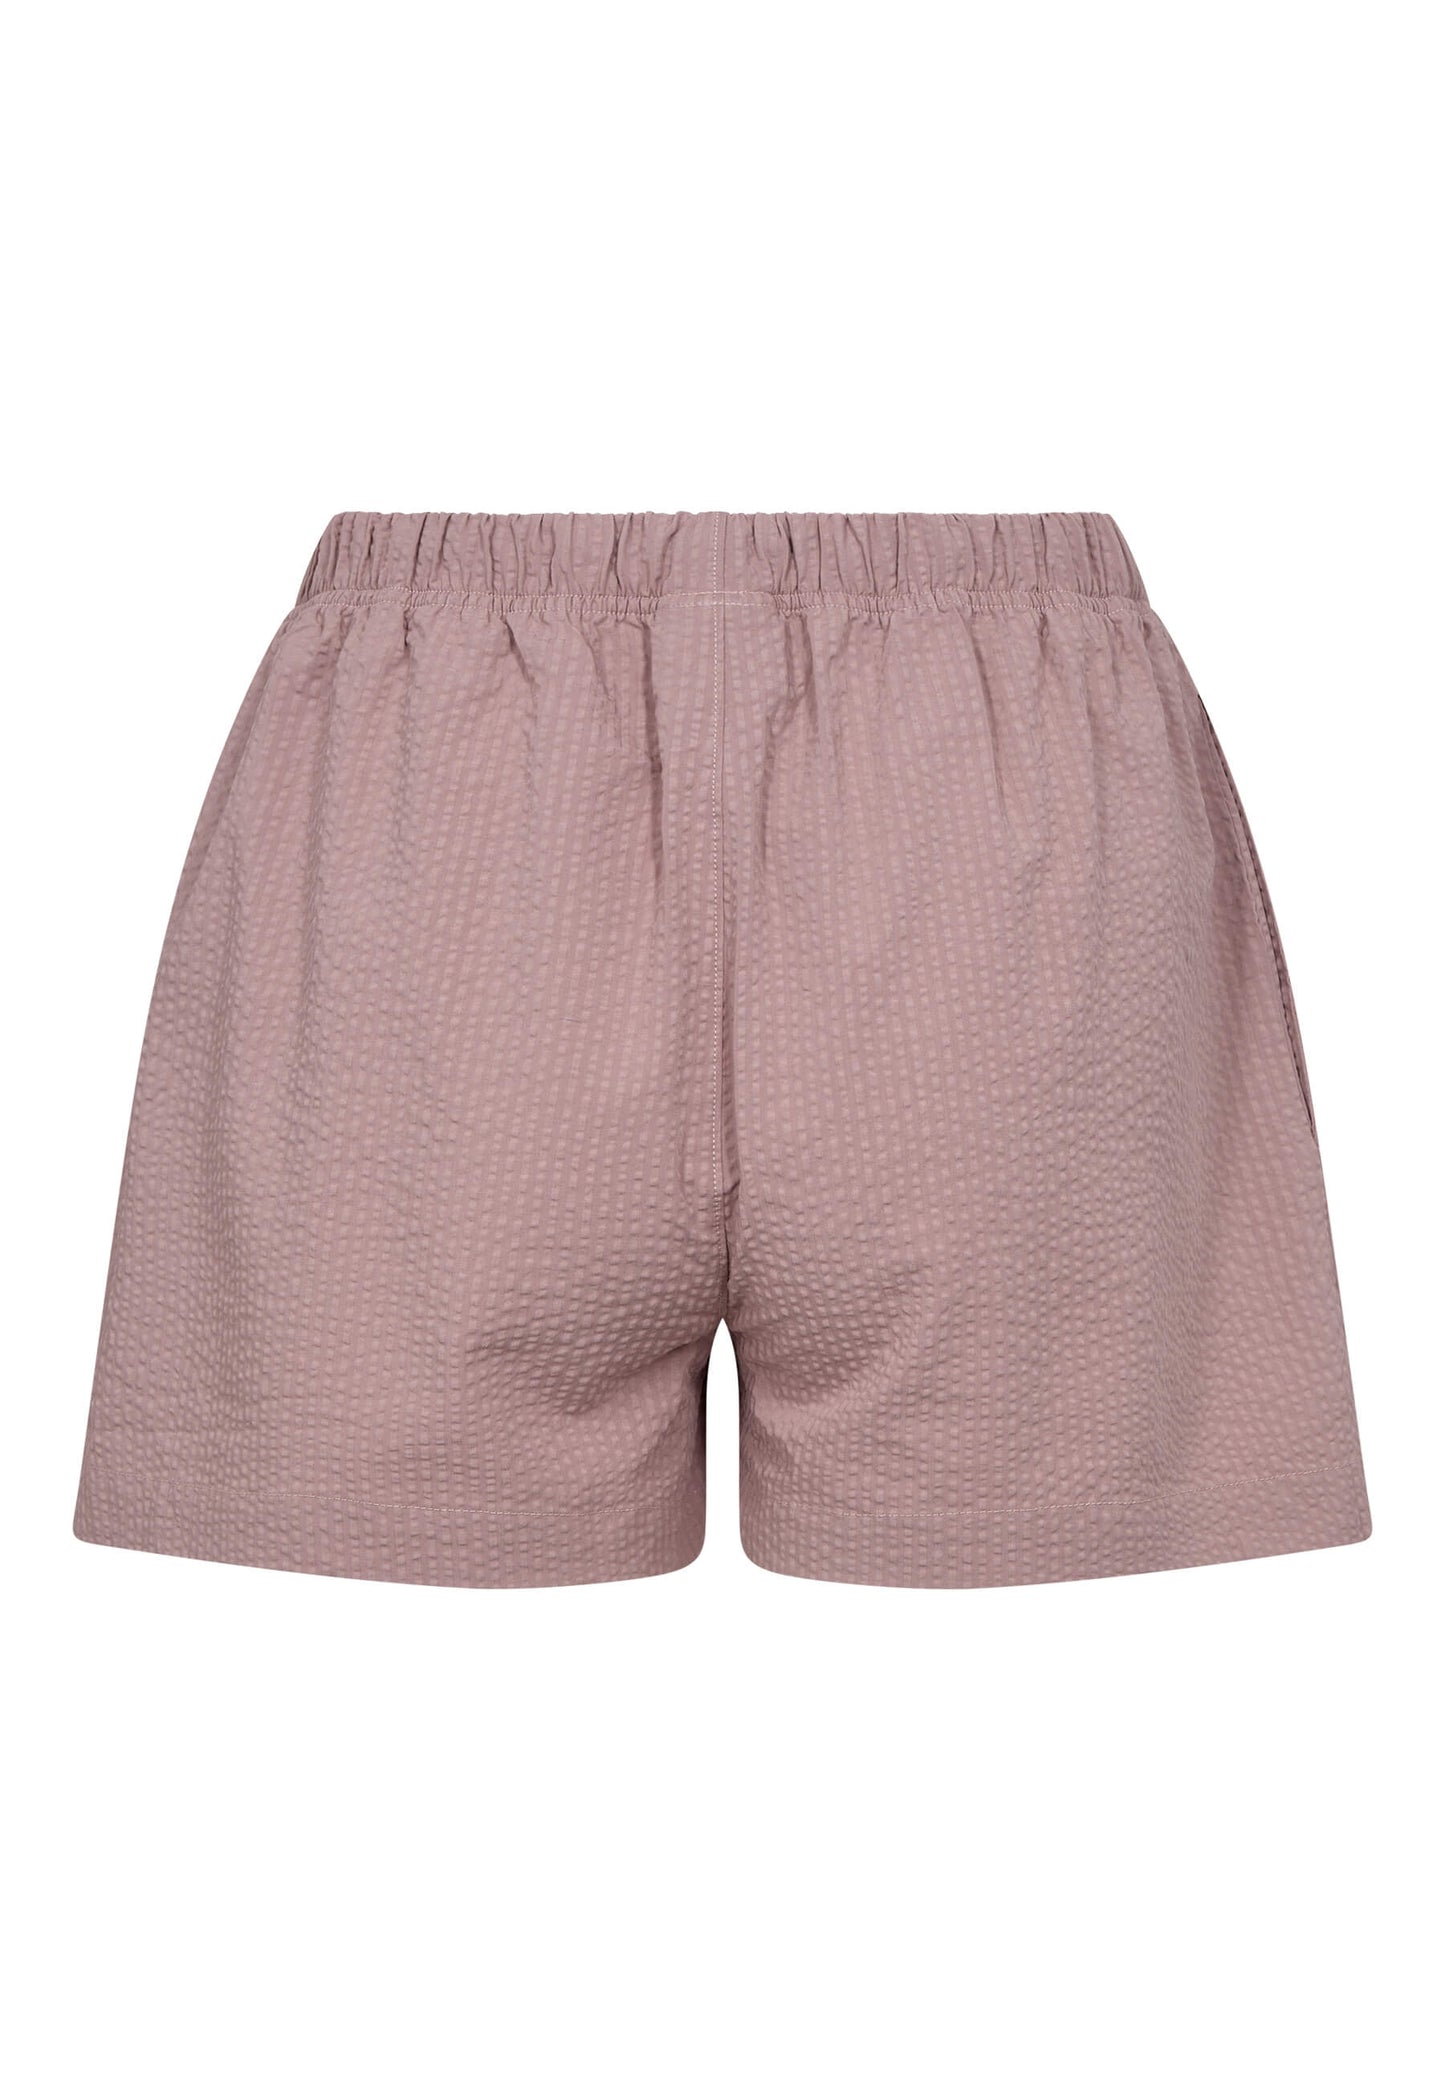 JBS of Denmark - Pj Shorts Fsc Old Pink